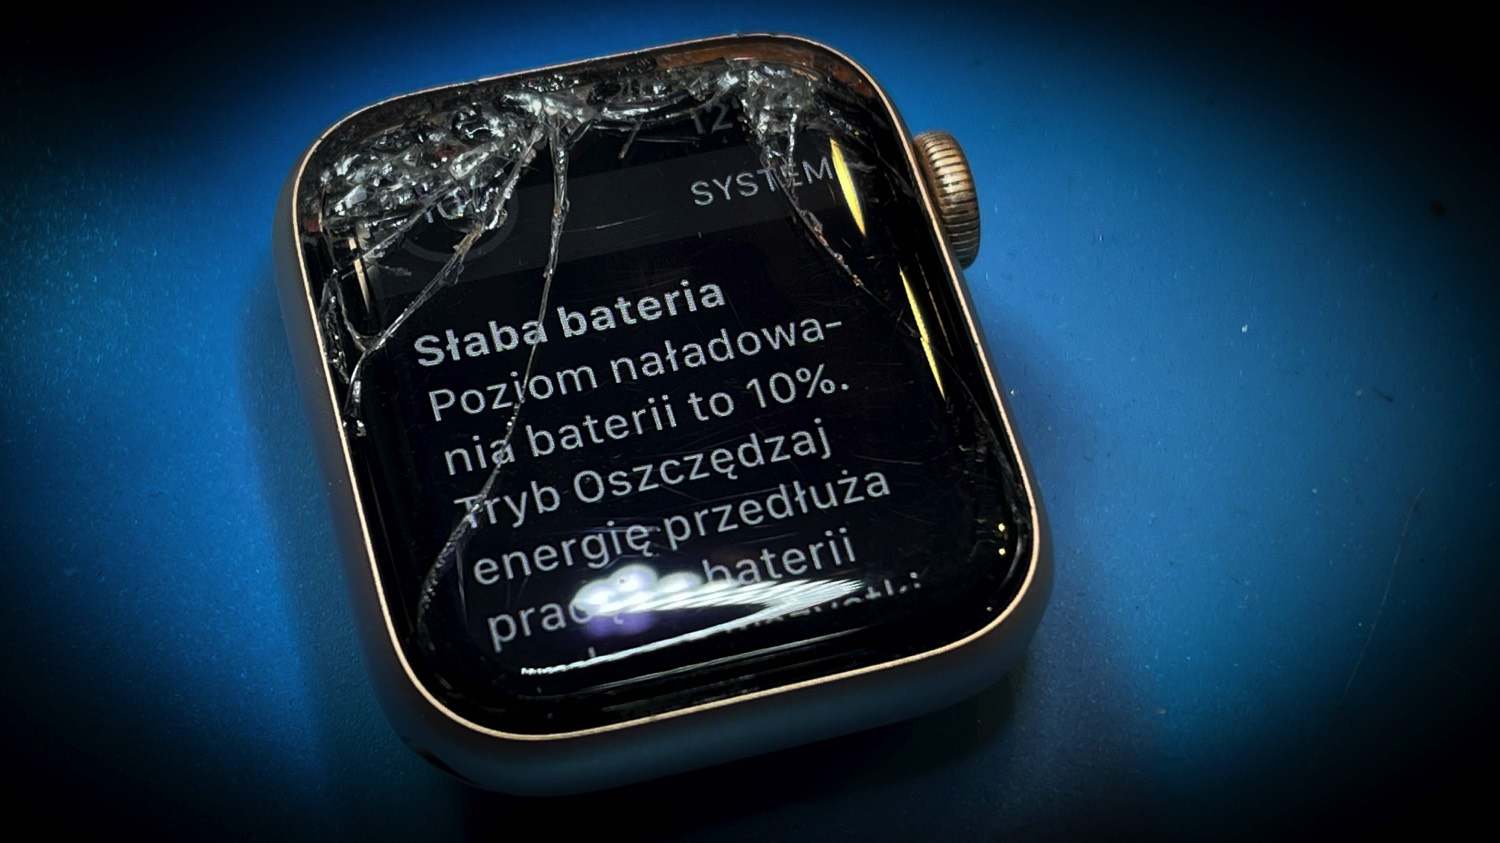 Ekran Apple Watch odkleił się. Bateria w Apple Watch spuchła. Naprawa Serwis Apple Watch. - Serwis iPhone Szczecin - AppleMobile.pl 